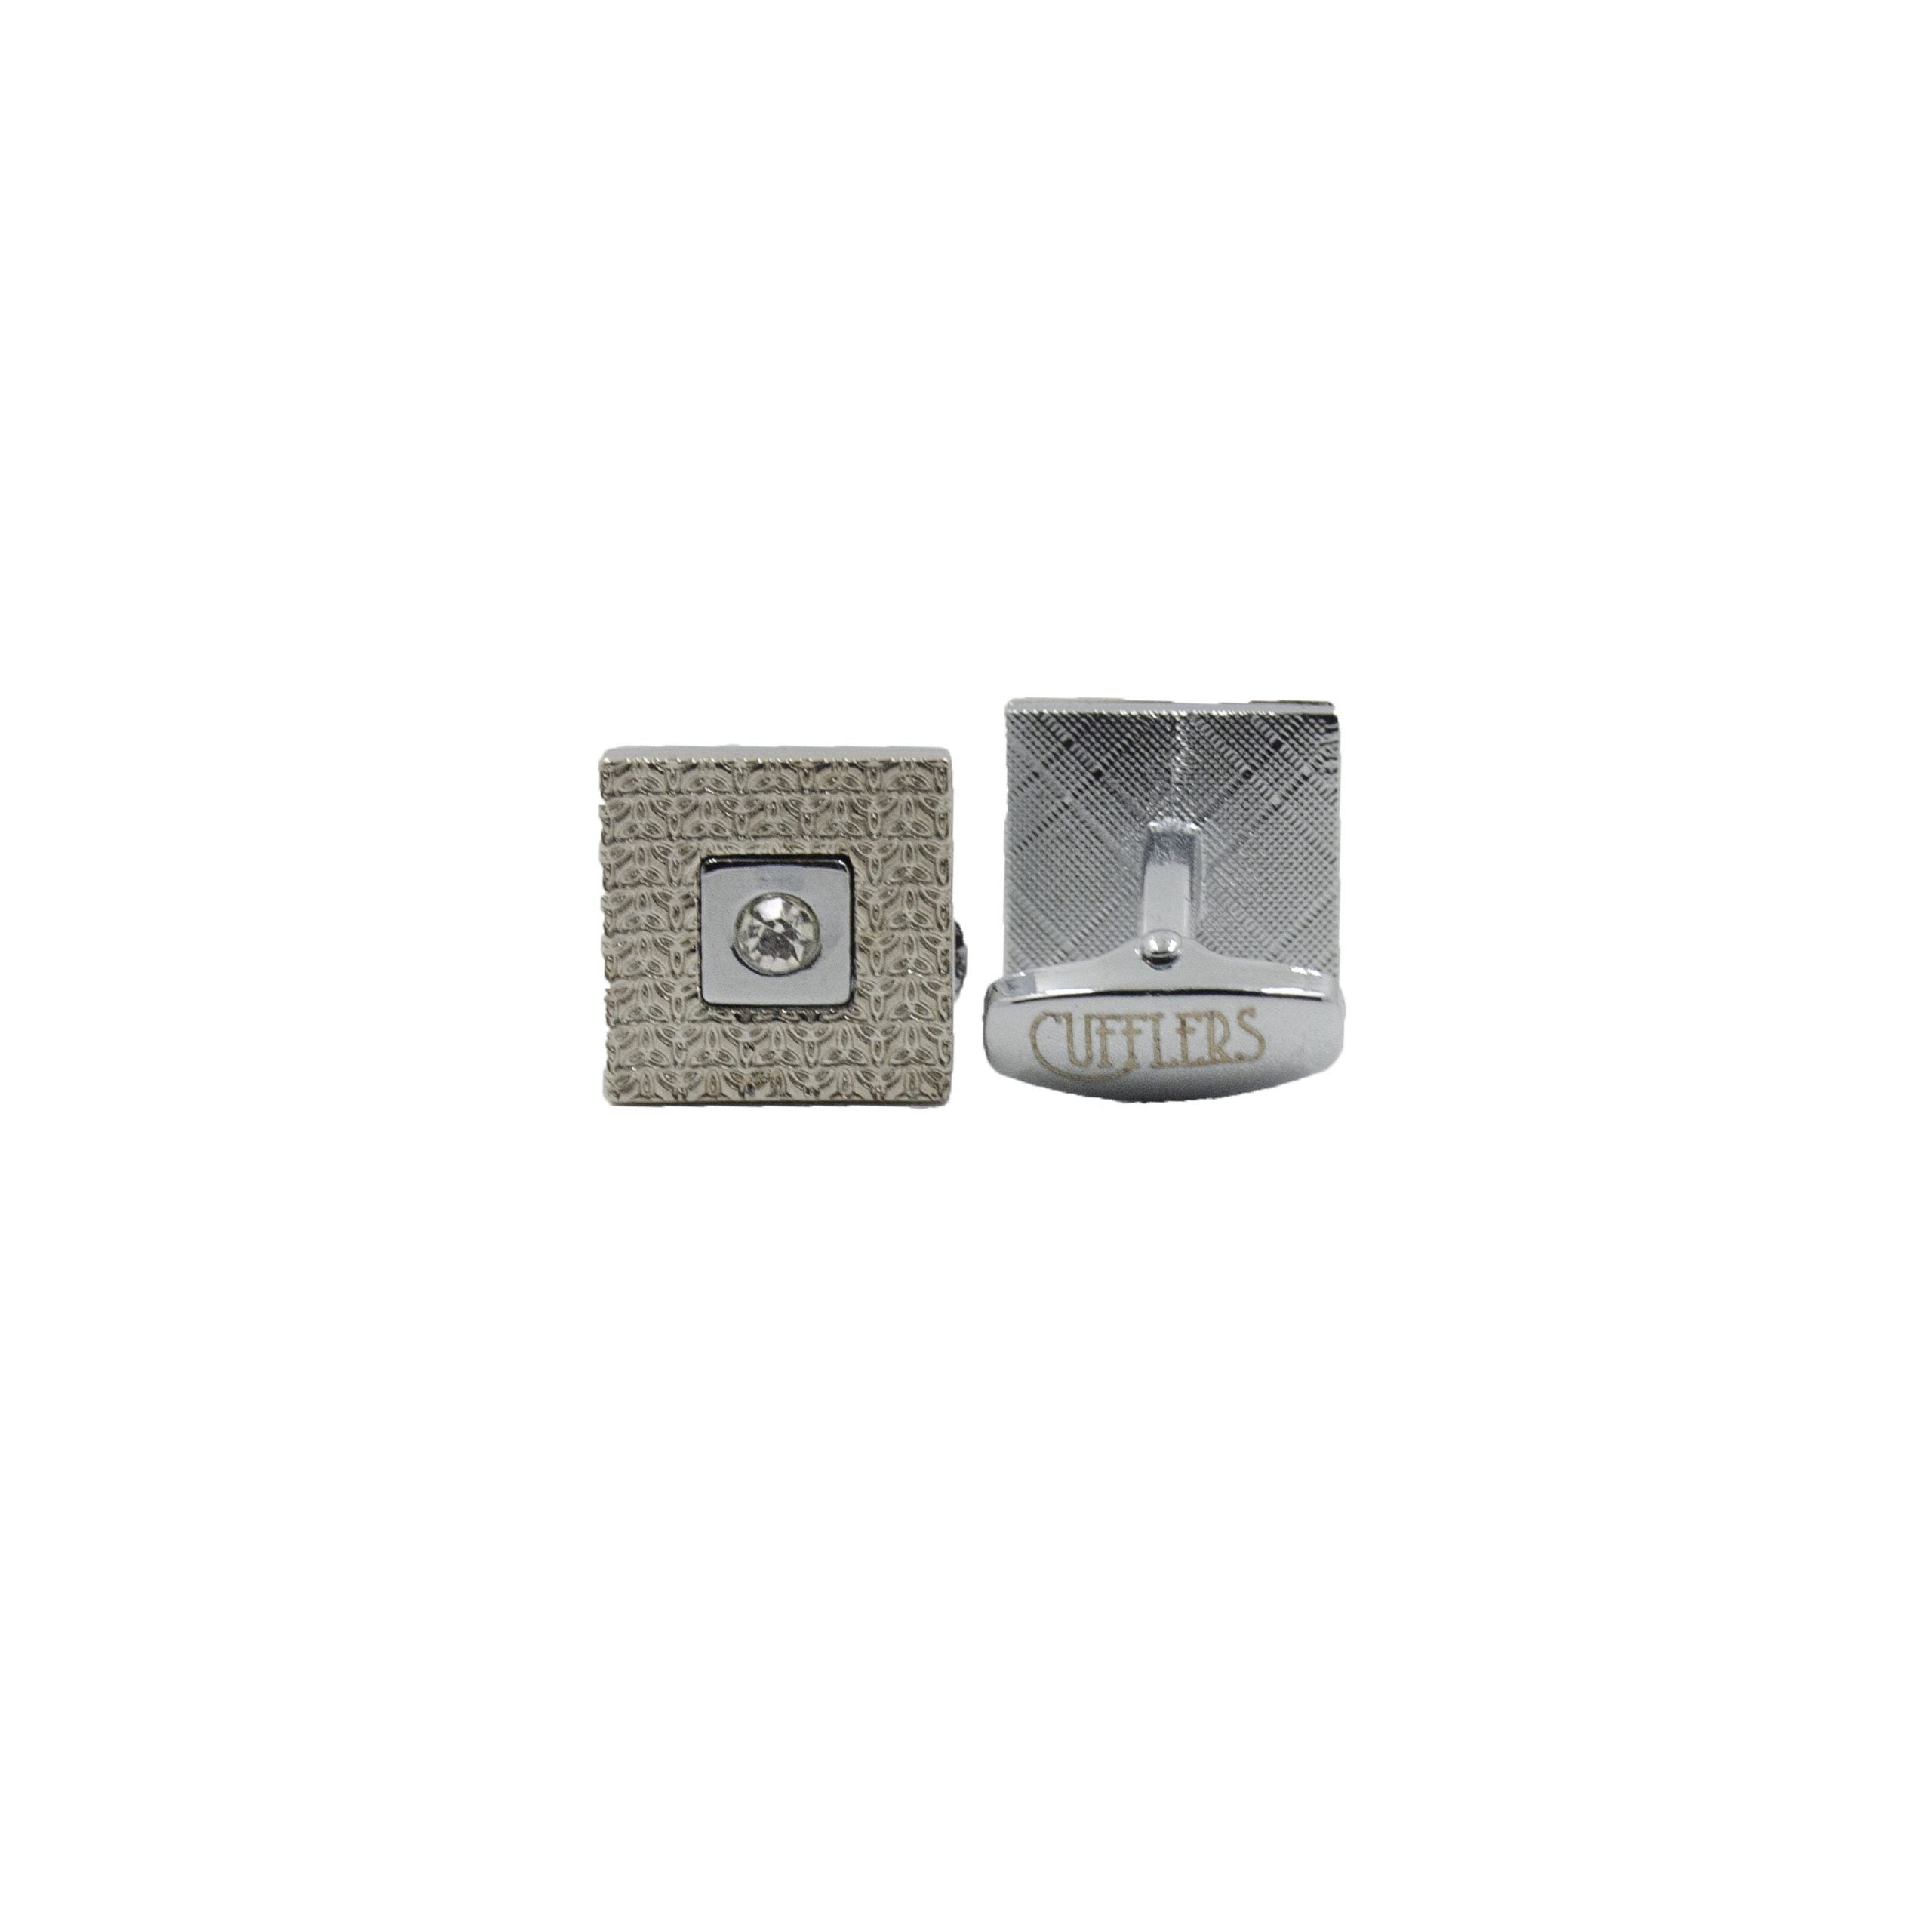 Cufflers Designer Cufflinks with Free Gift Box - Silver & White Square Design